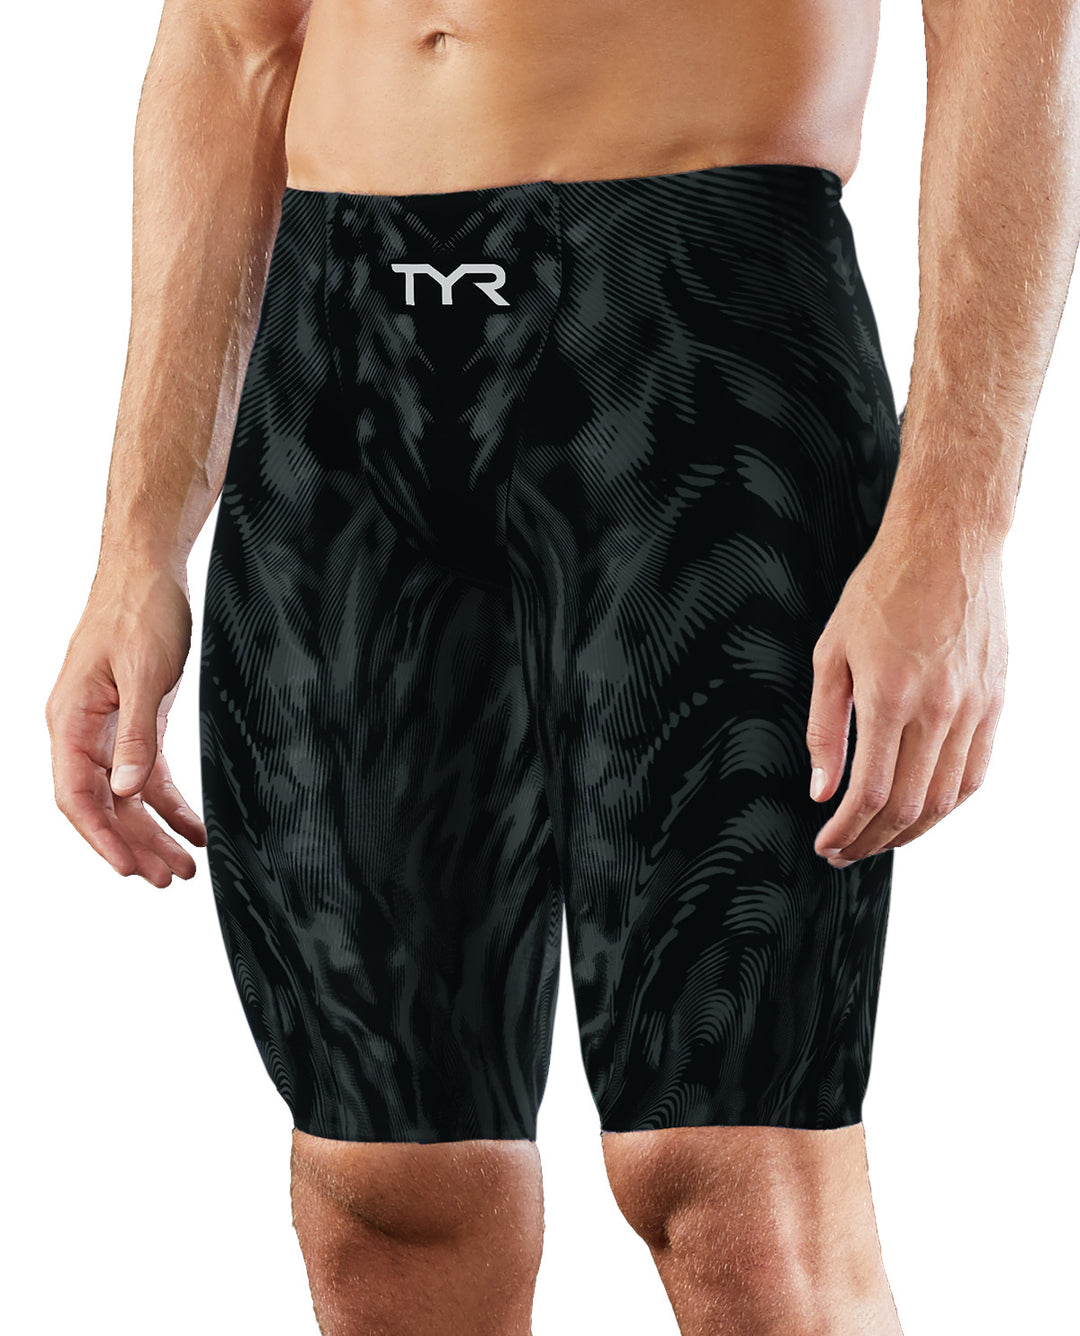 TYR Venzo Genesis Men's High Waist Jammer Swimsuit - Onyx